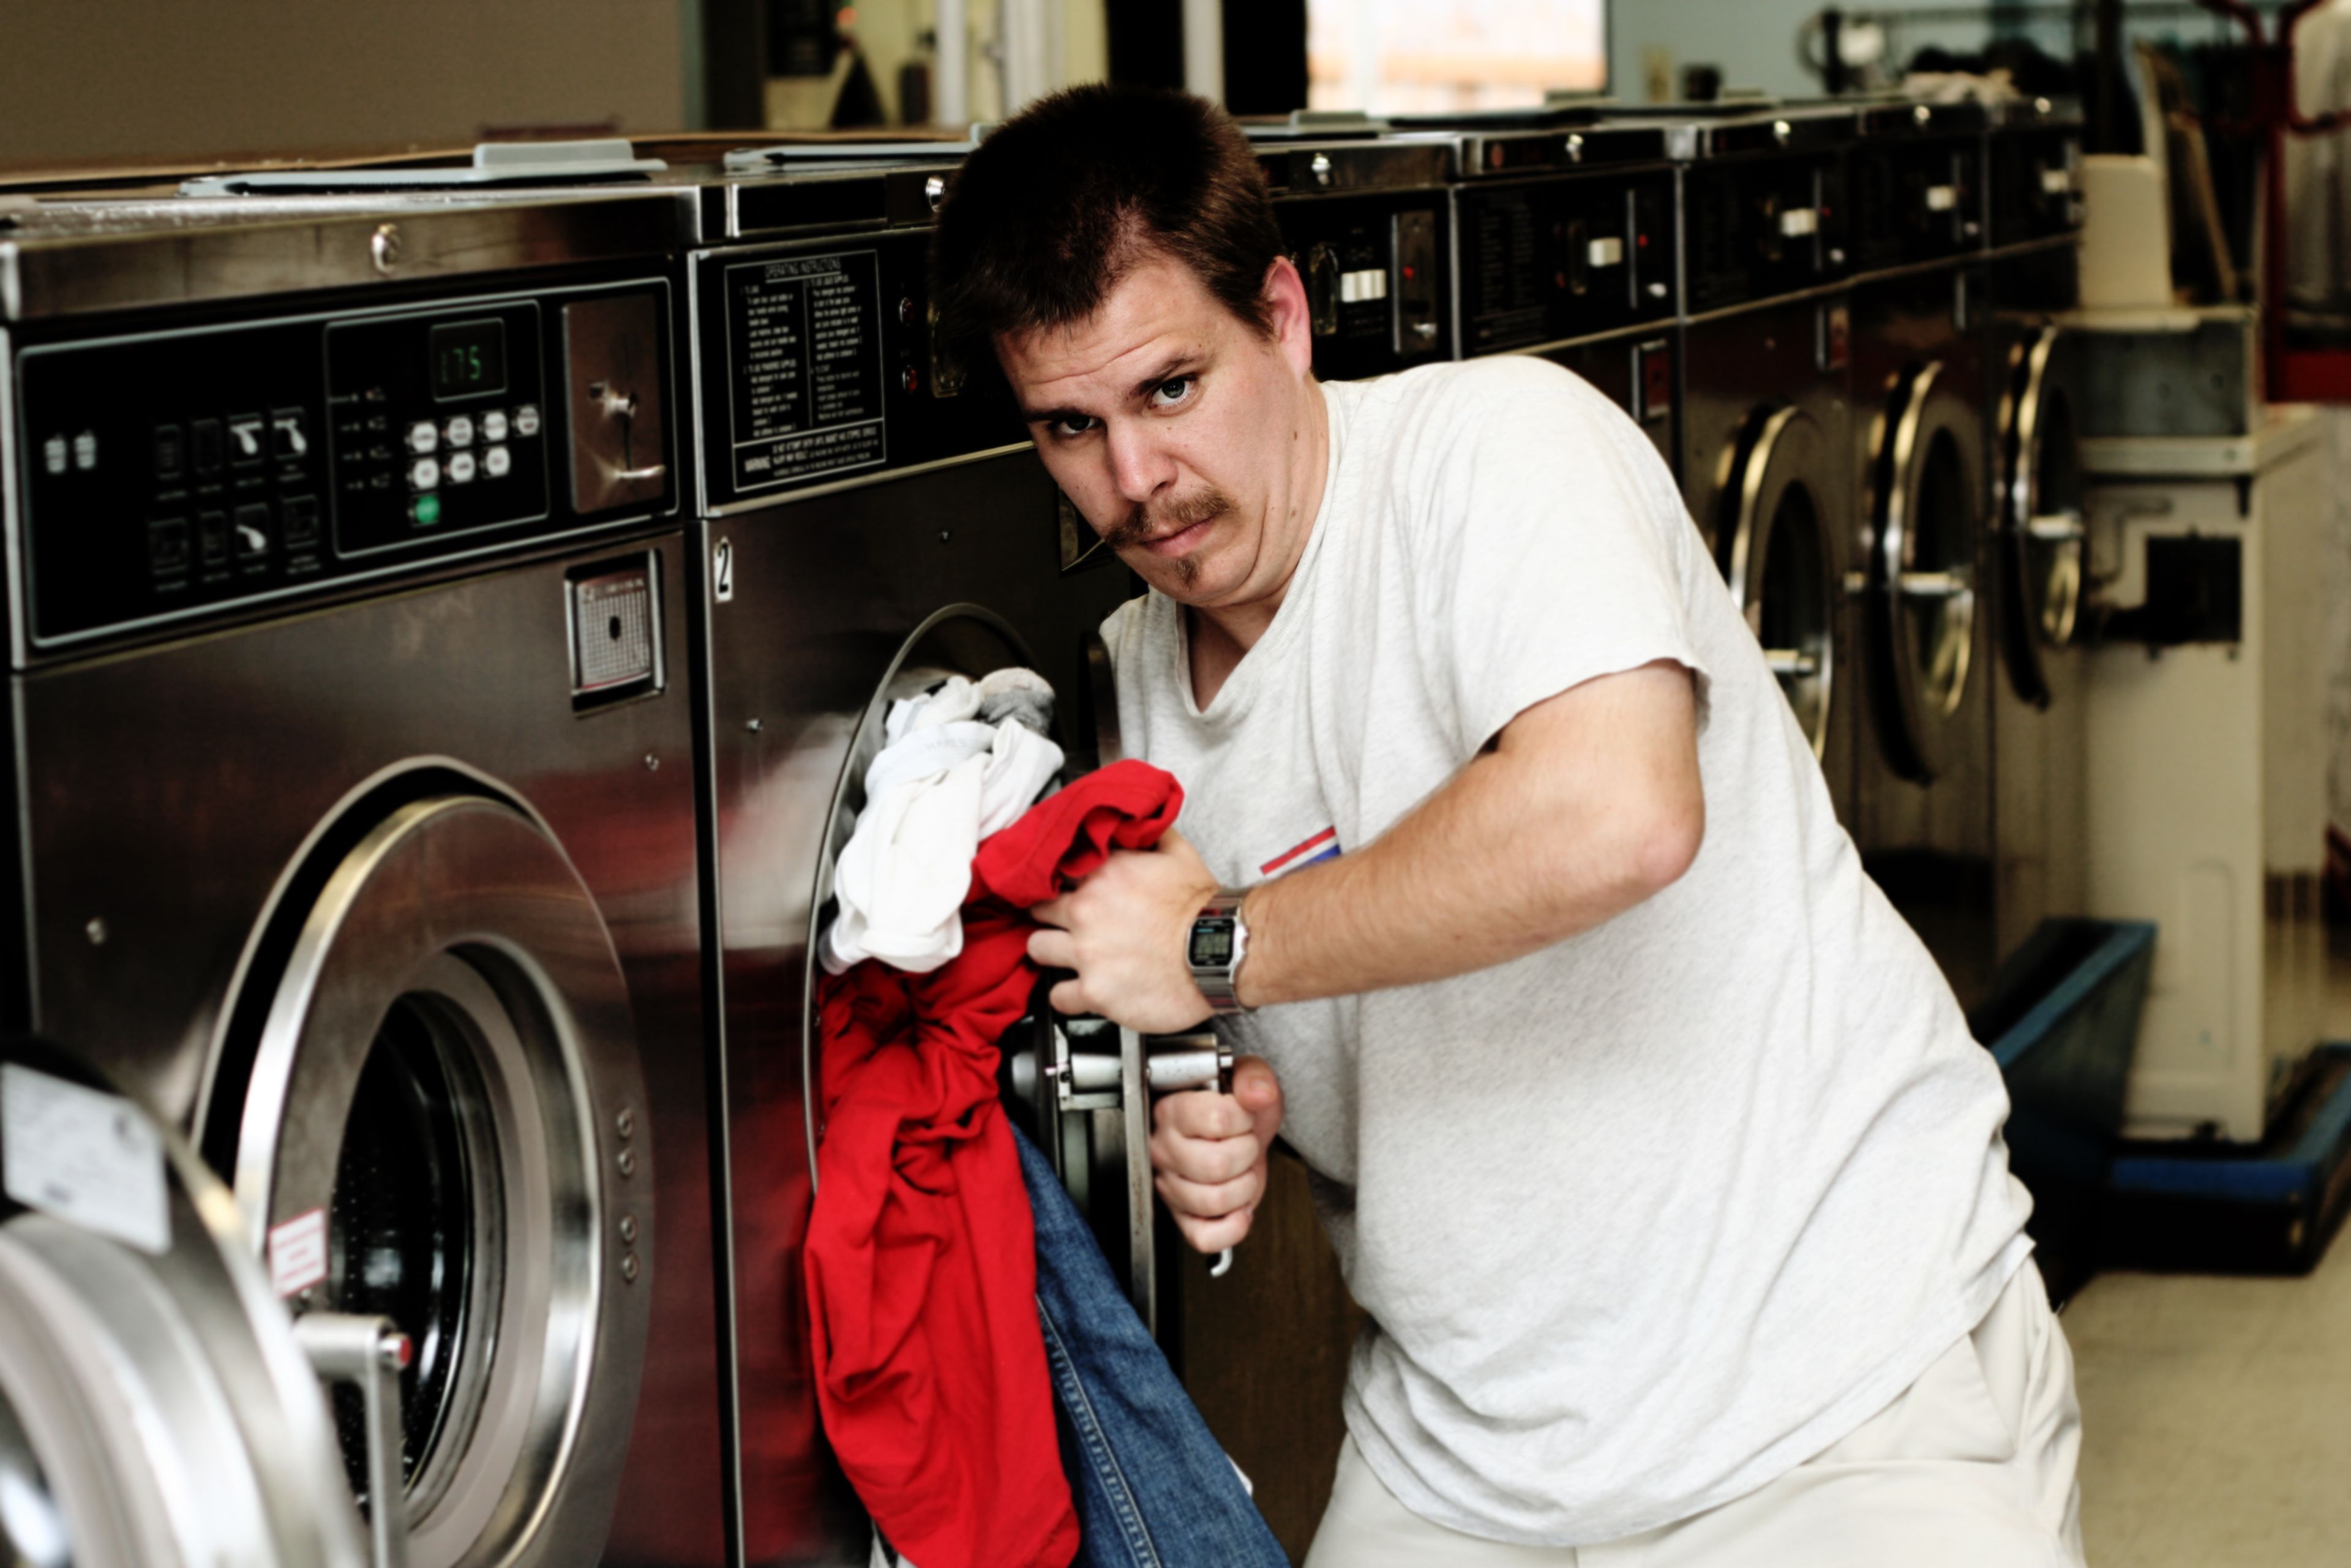 Un hombre intenta cerrar una lavadora.